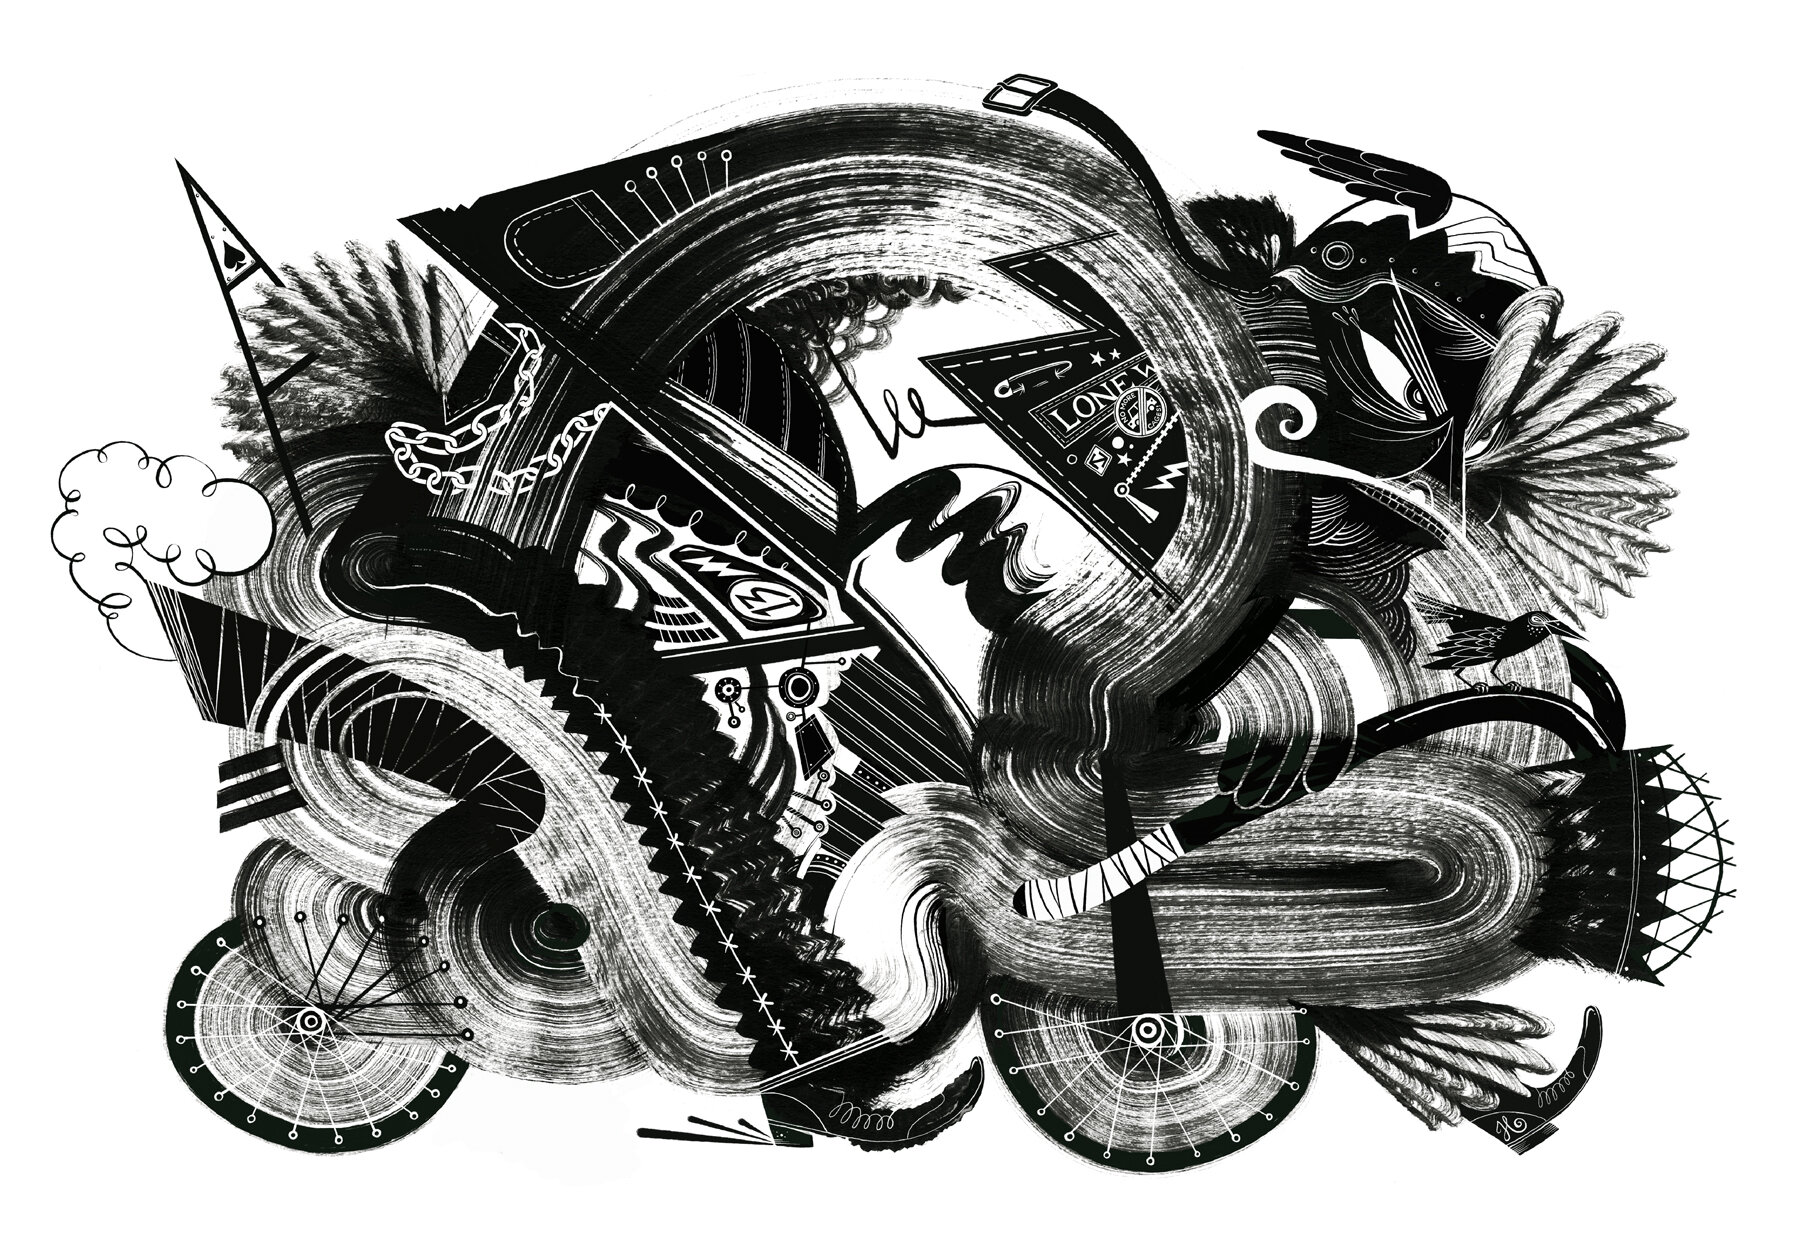 Skillful Rider by David Habben